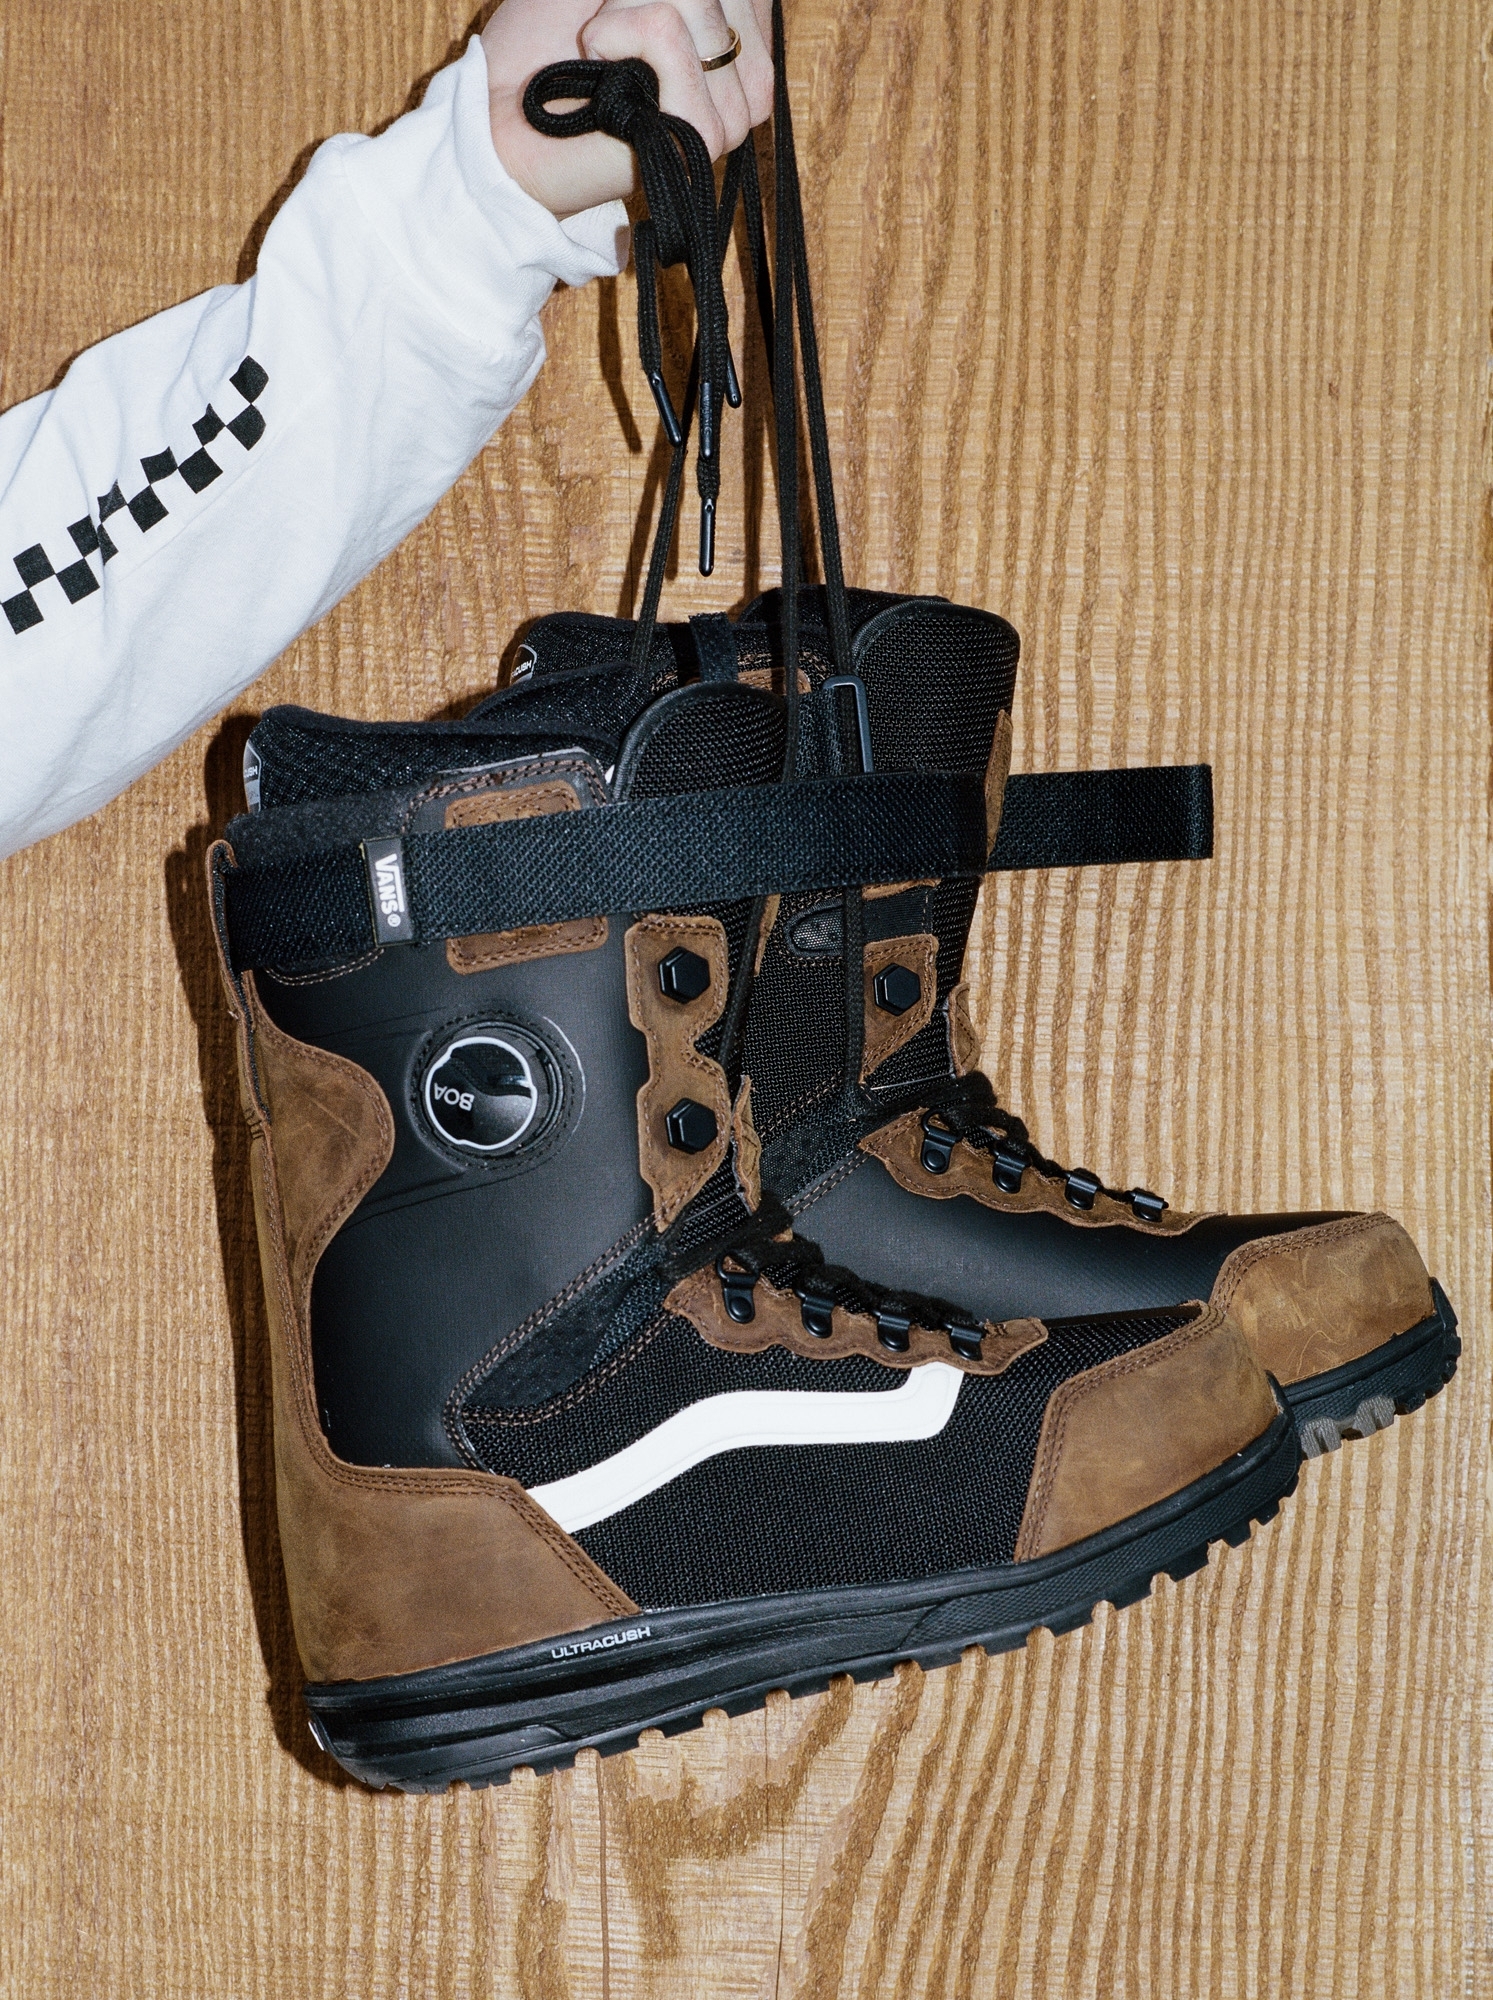 vans snowboard boots pat moore